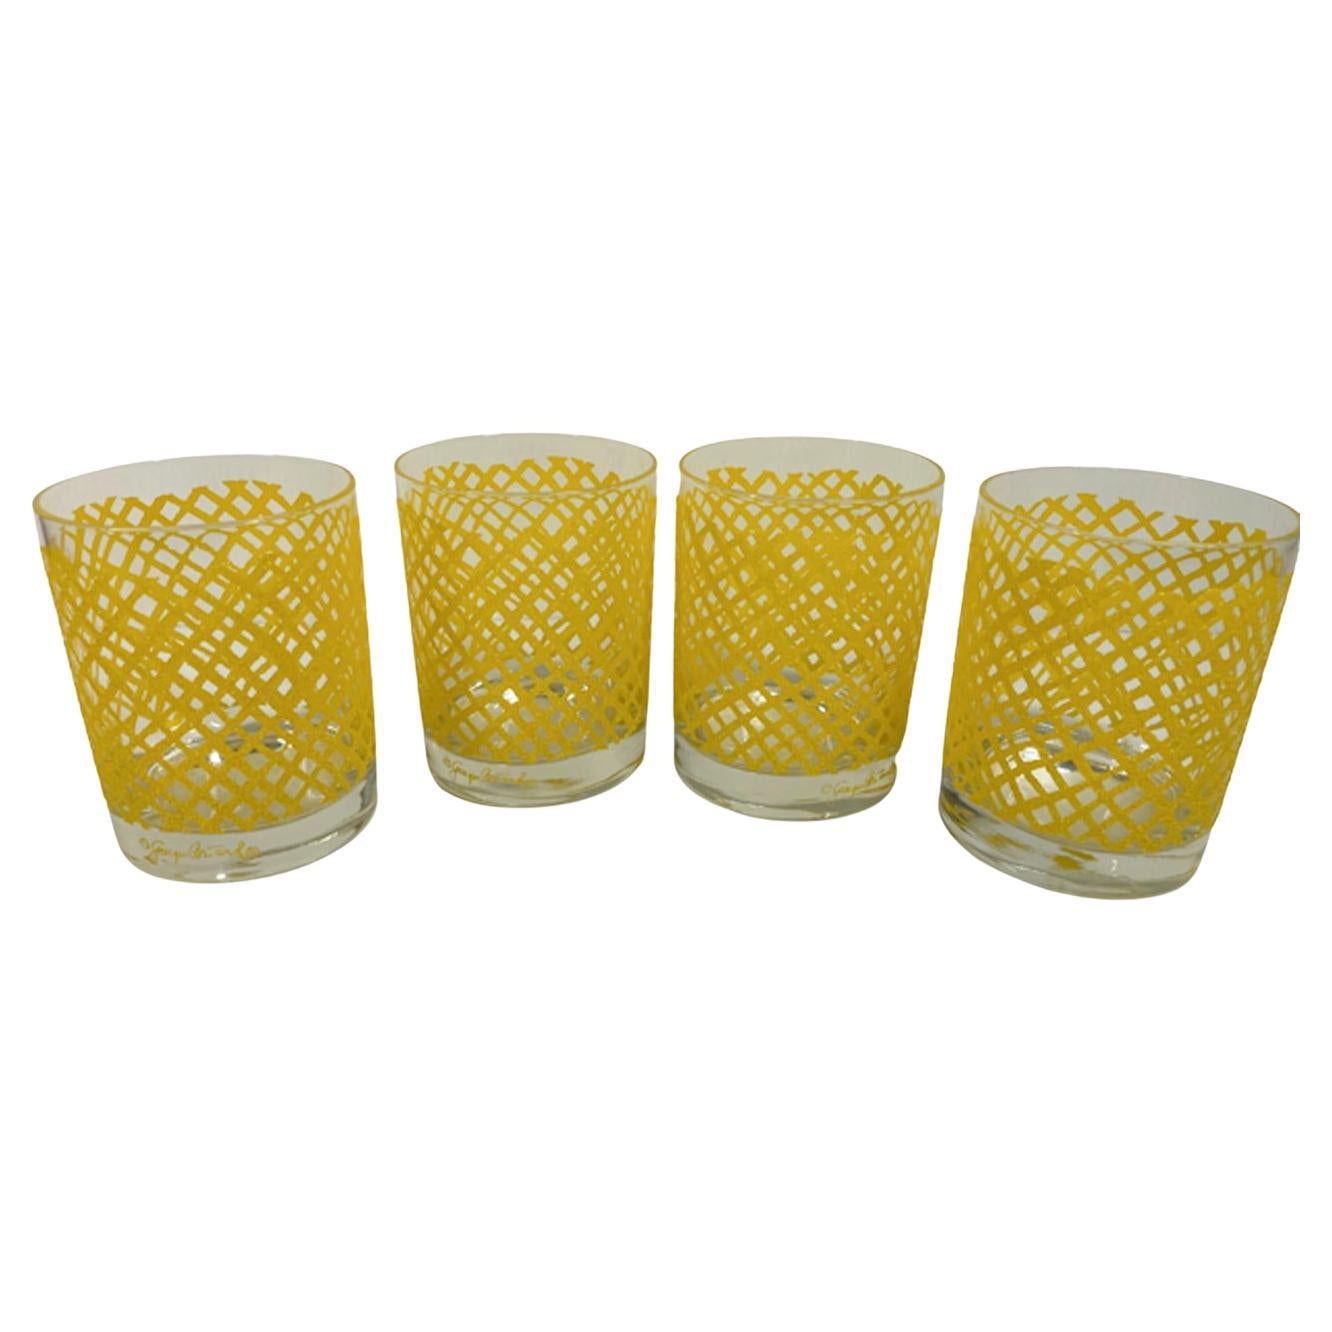 Ensemble de 4 verres vintage Georges Briard Rocks avec motif de filet jaune en relief en vente